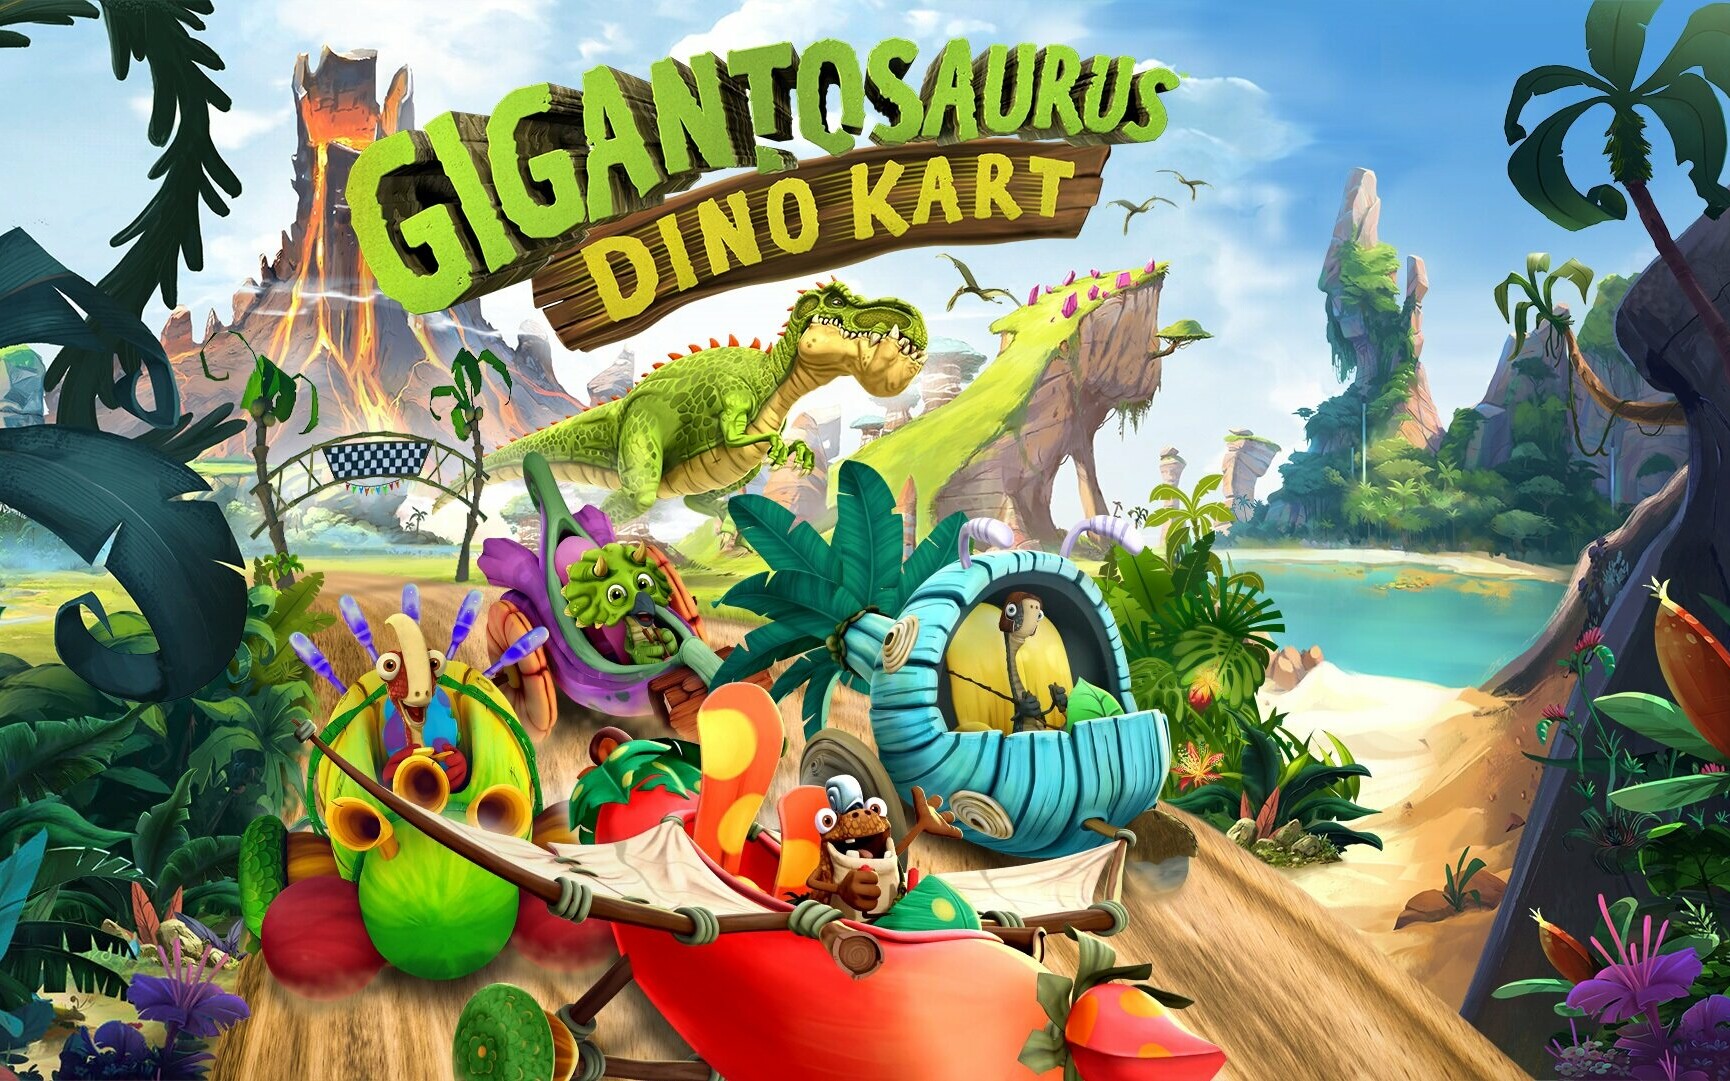 Gigantozaur: Dino Kart